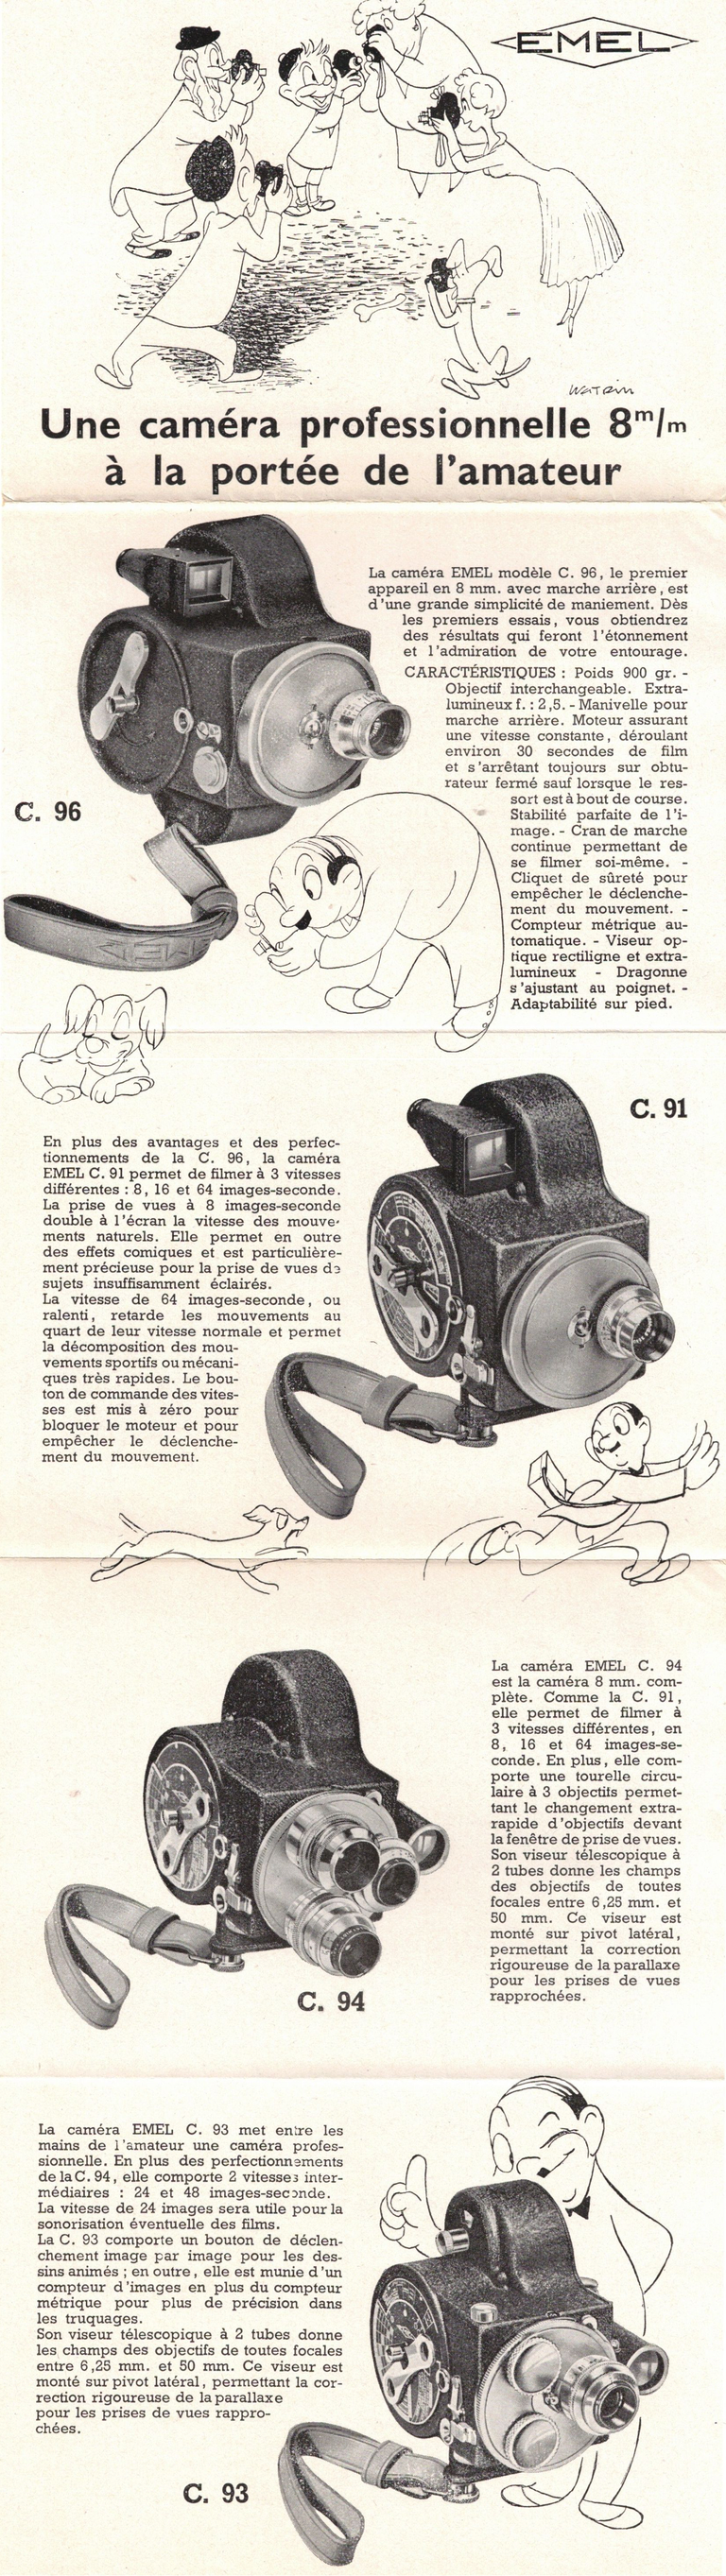 Emel caméras 8 mm C96, C91, C94, C93 - 1950 - recto